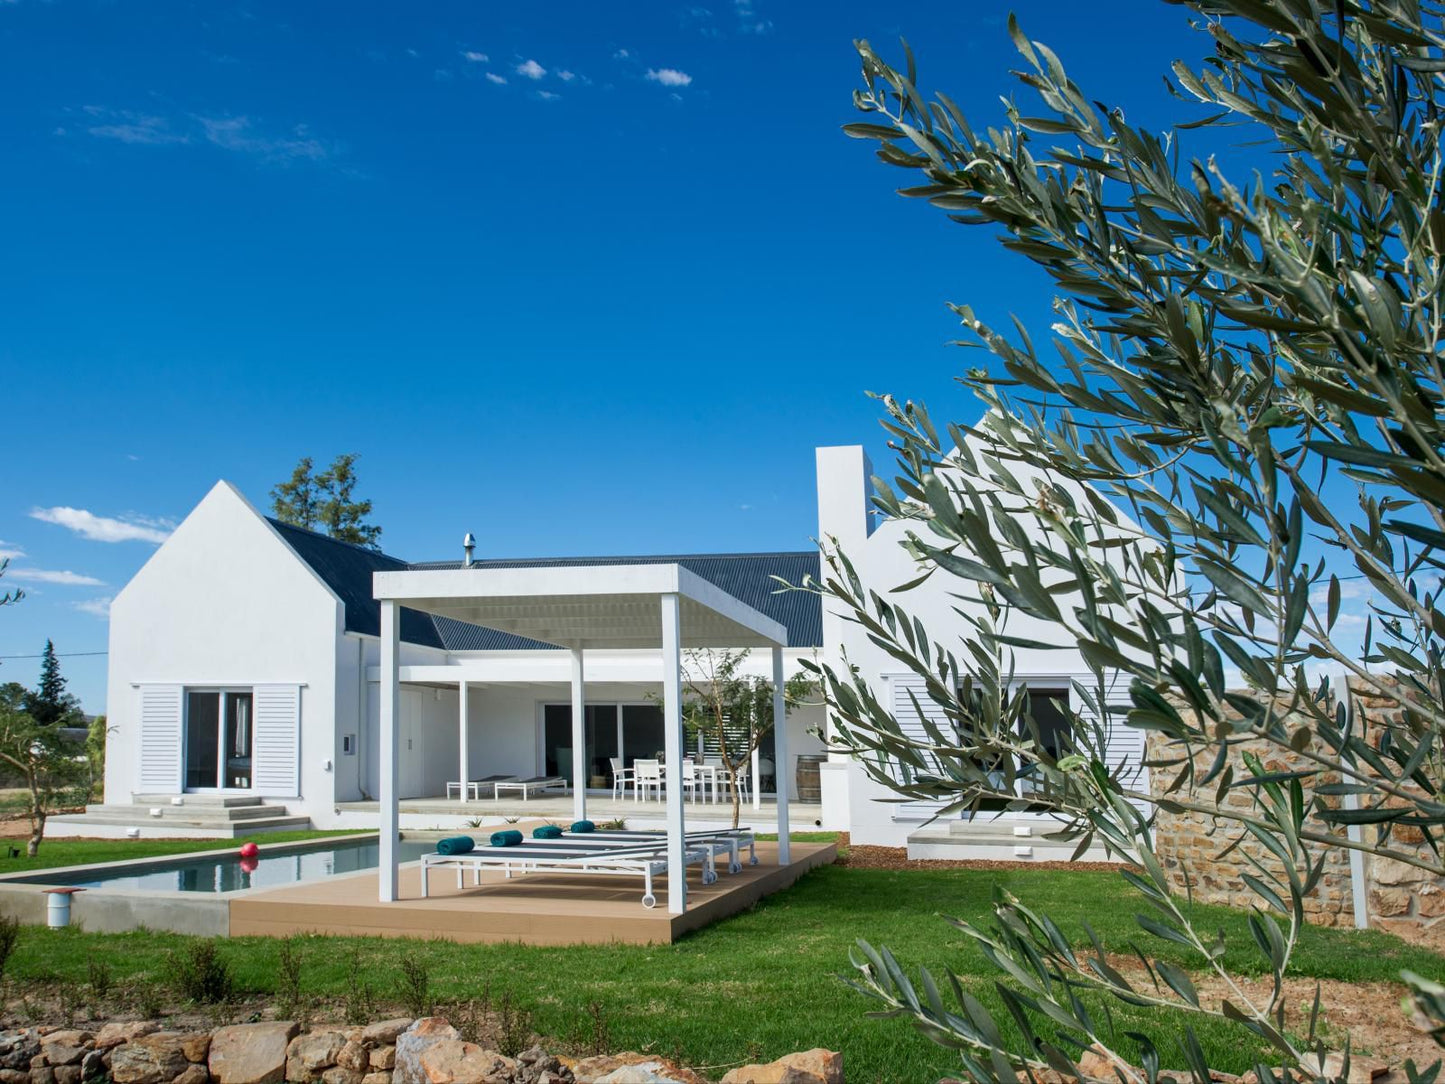 Lucky Crane Villas Mcgregor Western Cape South Africa House, Building, Architecture